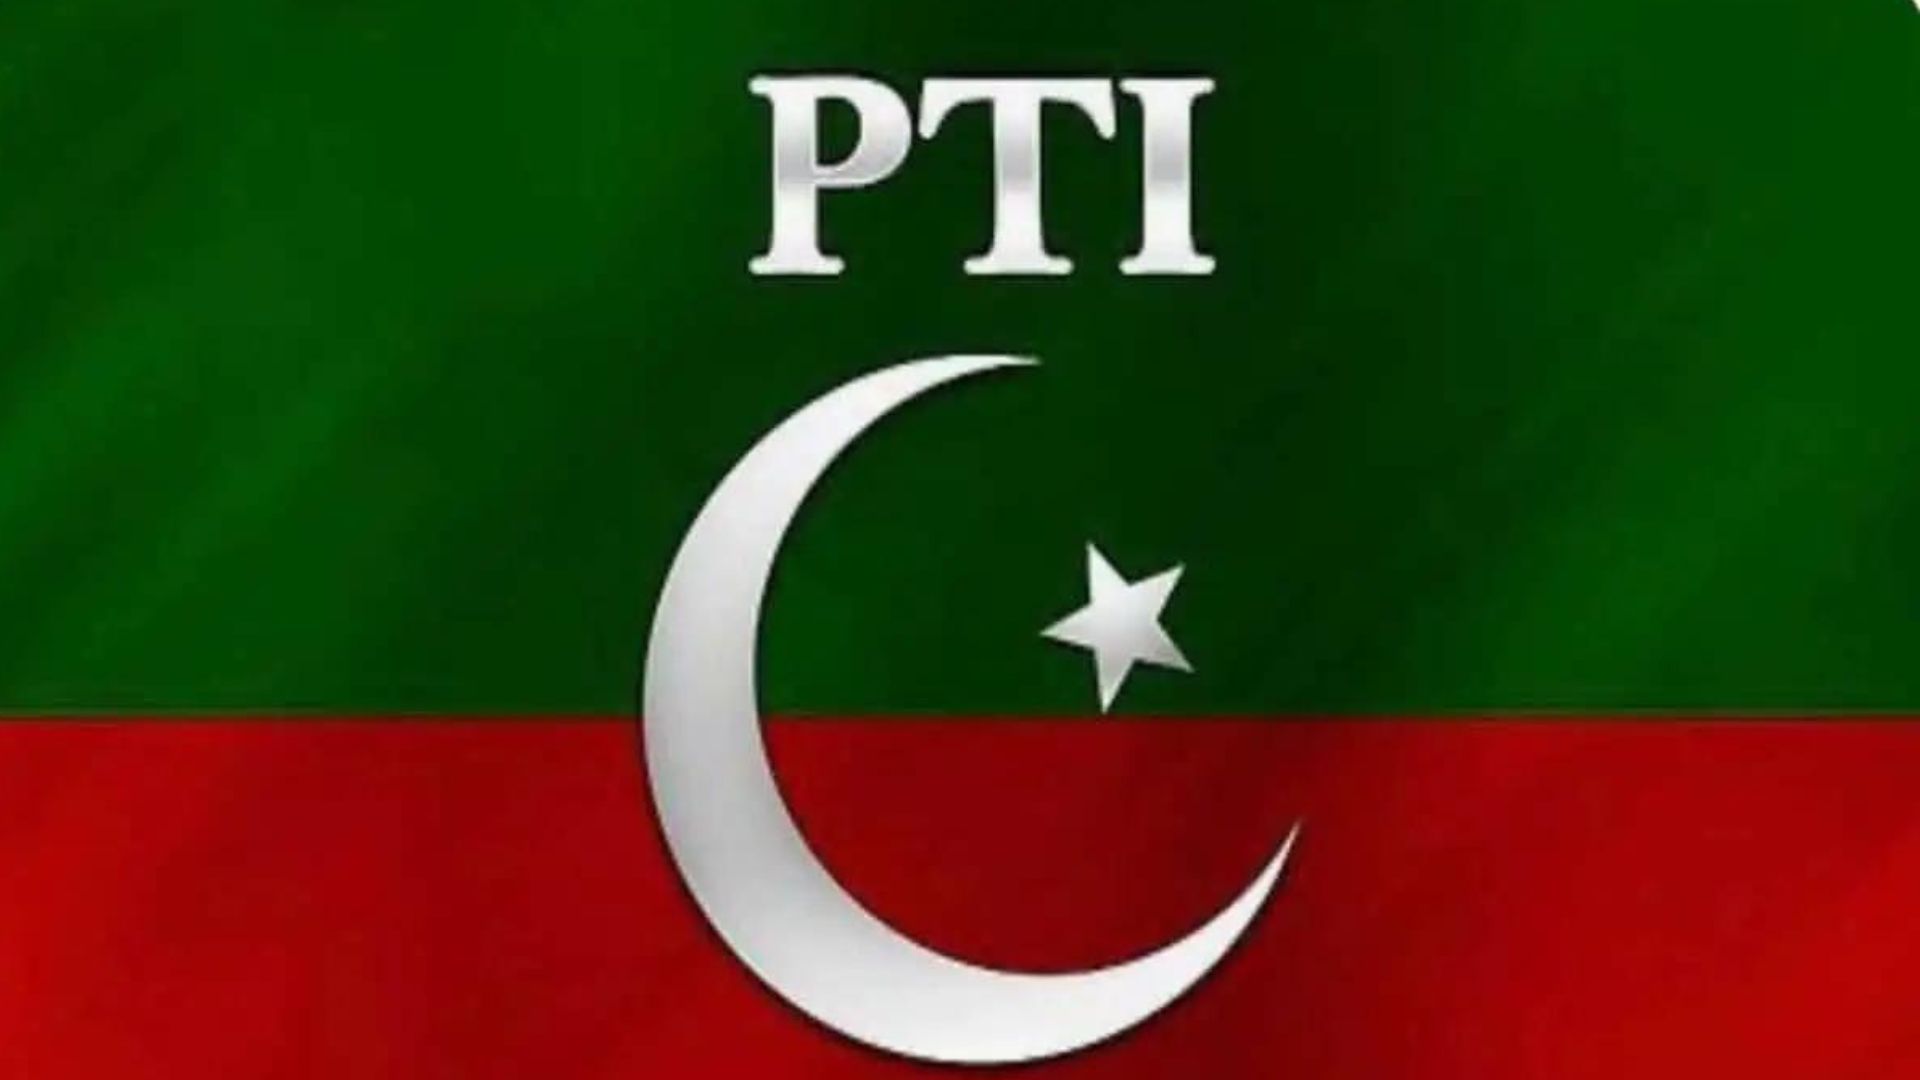 PTI Turmoil Deepens: Resignations & Calls For Leadership Change Rock Imran Khan’s Party